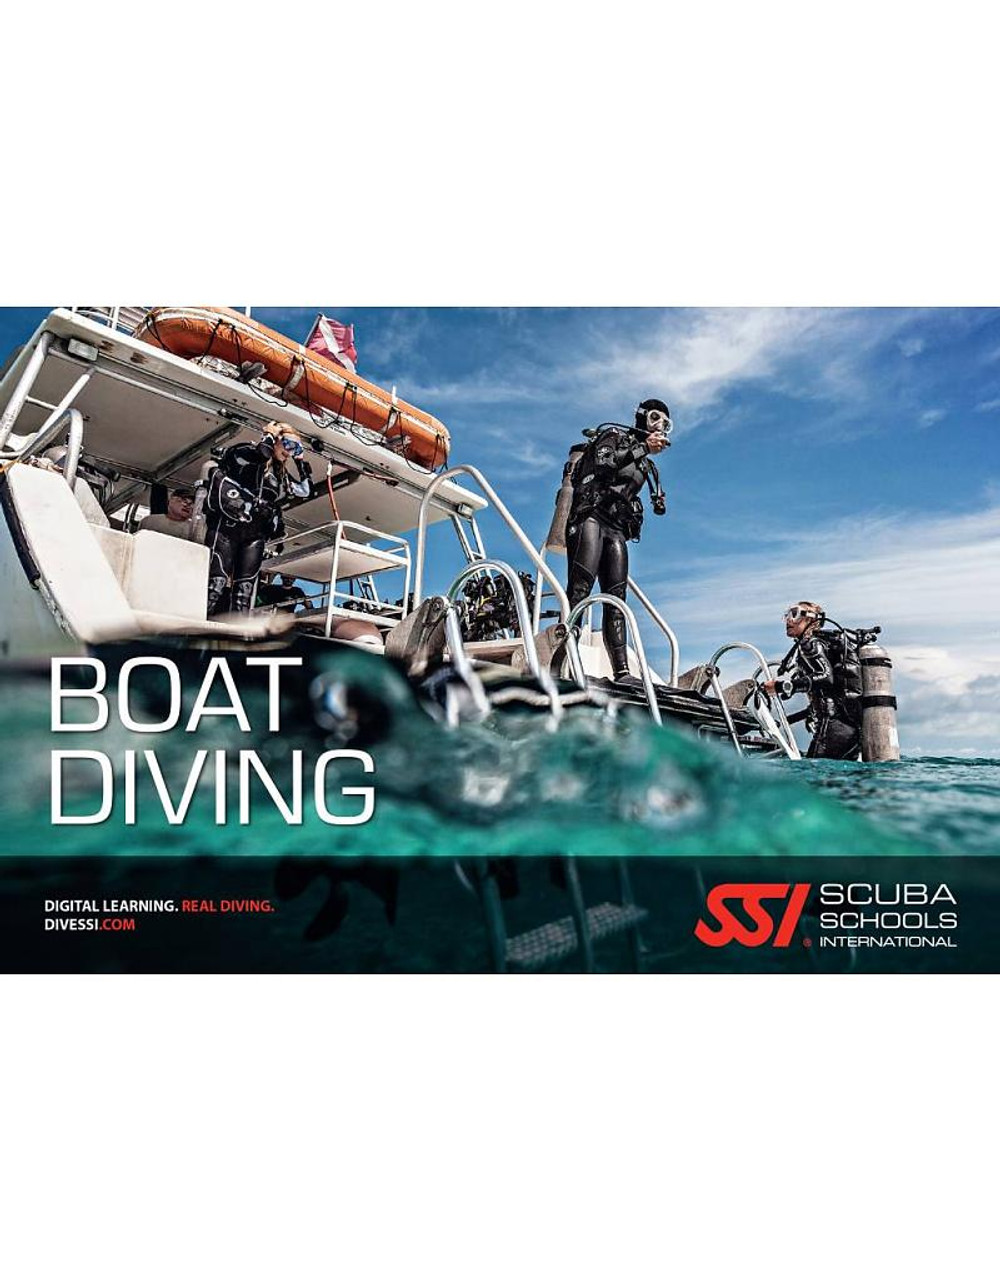 SSI Boat Diving Digital Kit